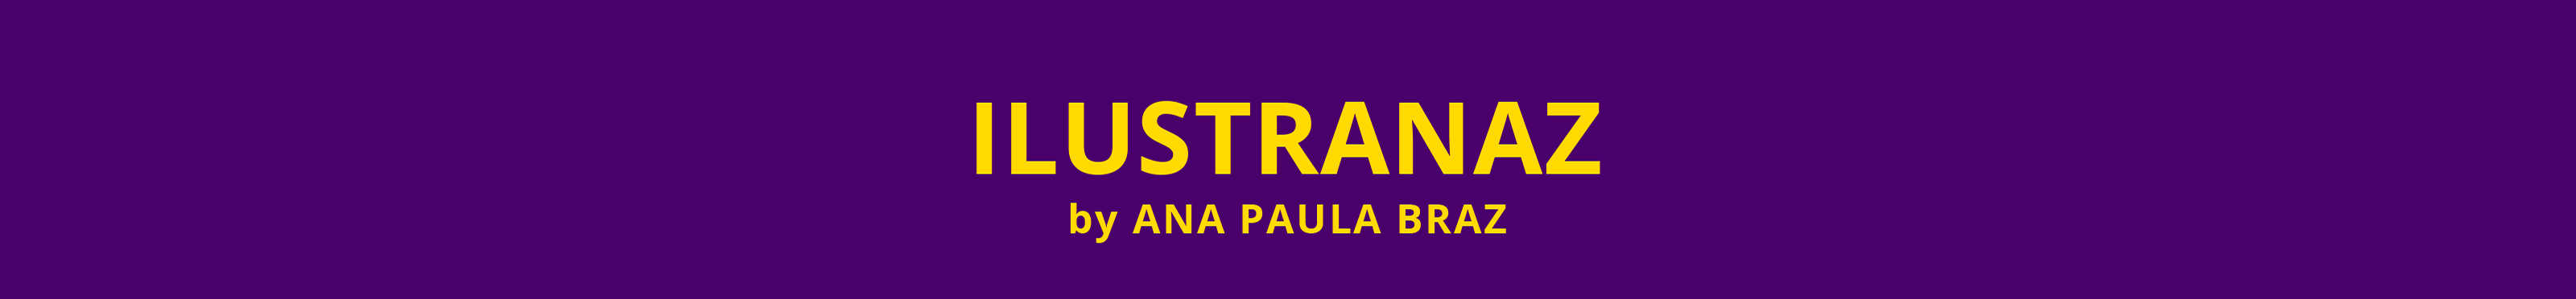 Баннер профиля Ana Paula Braz